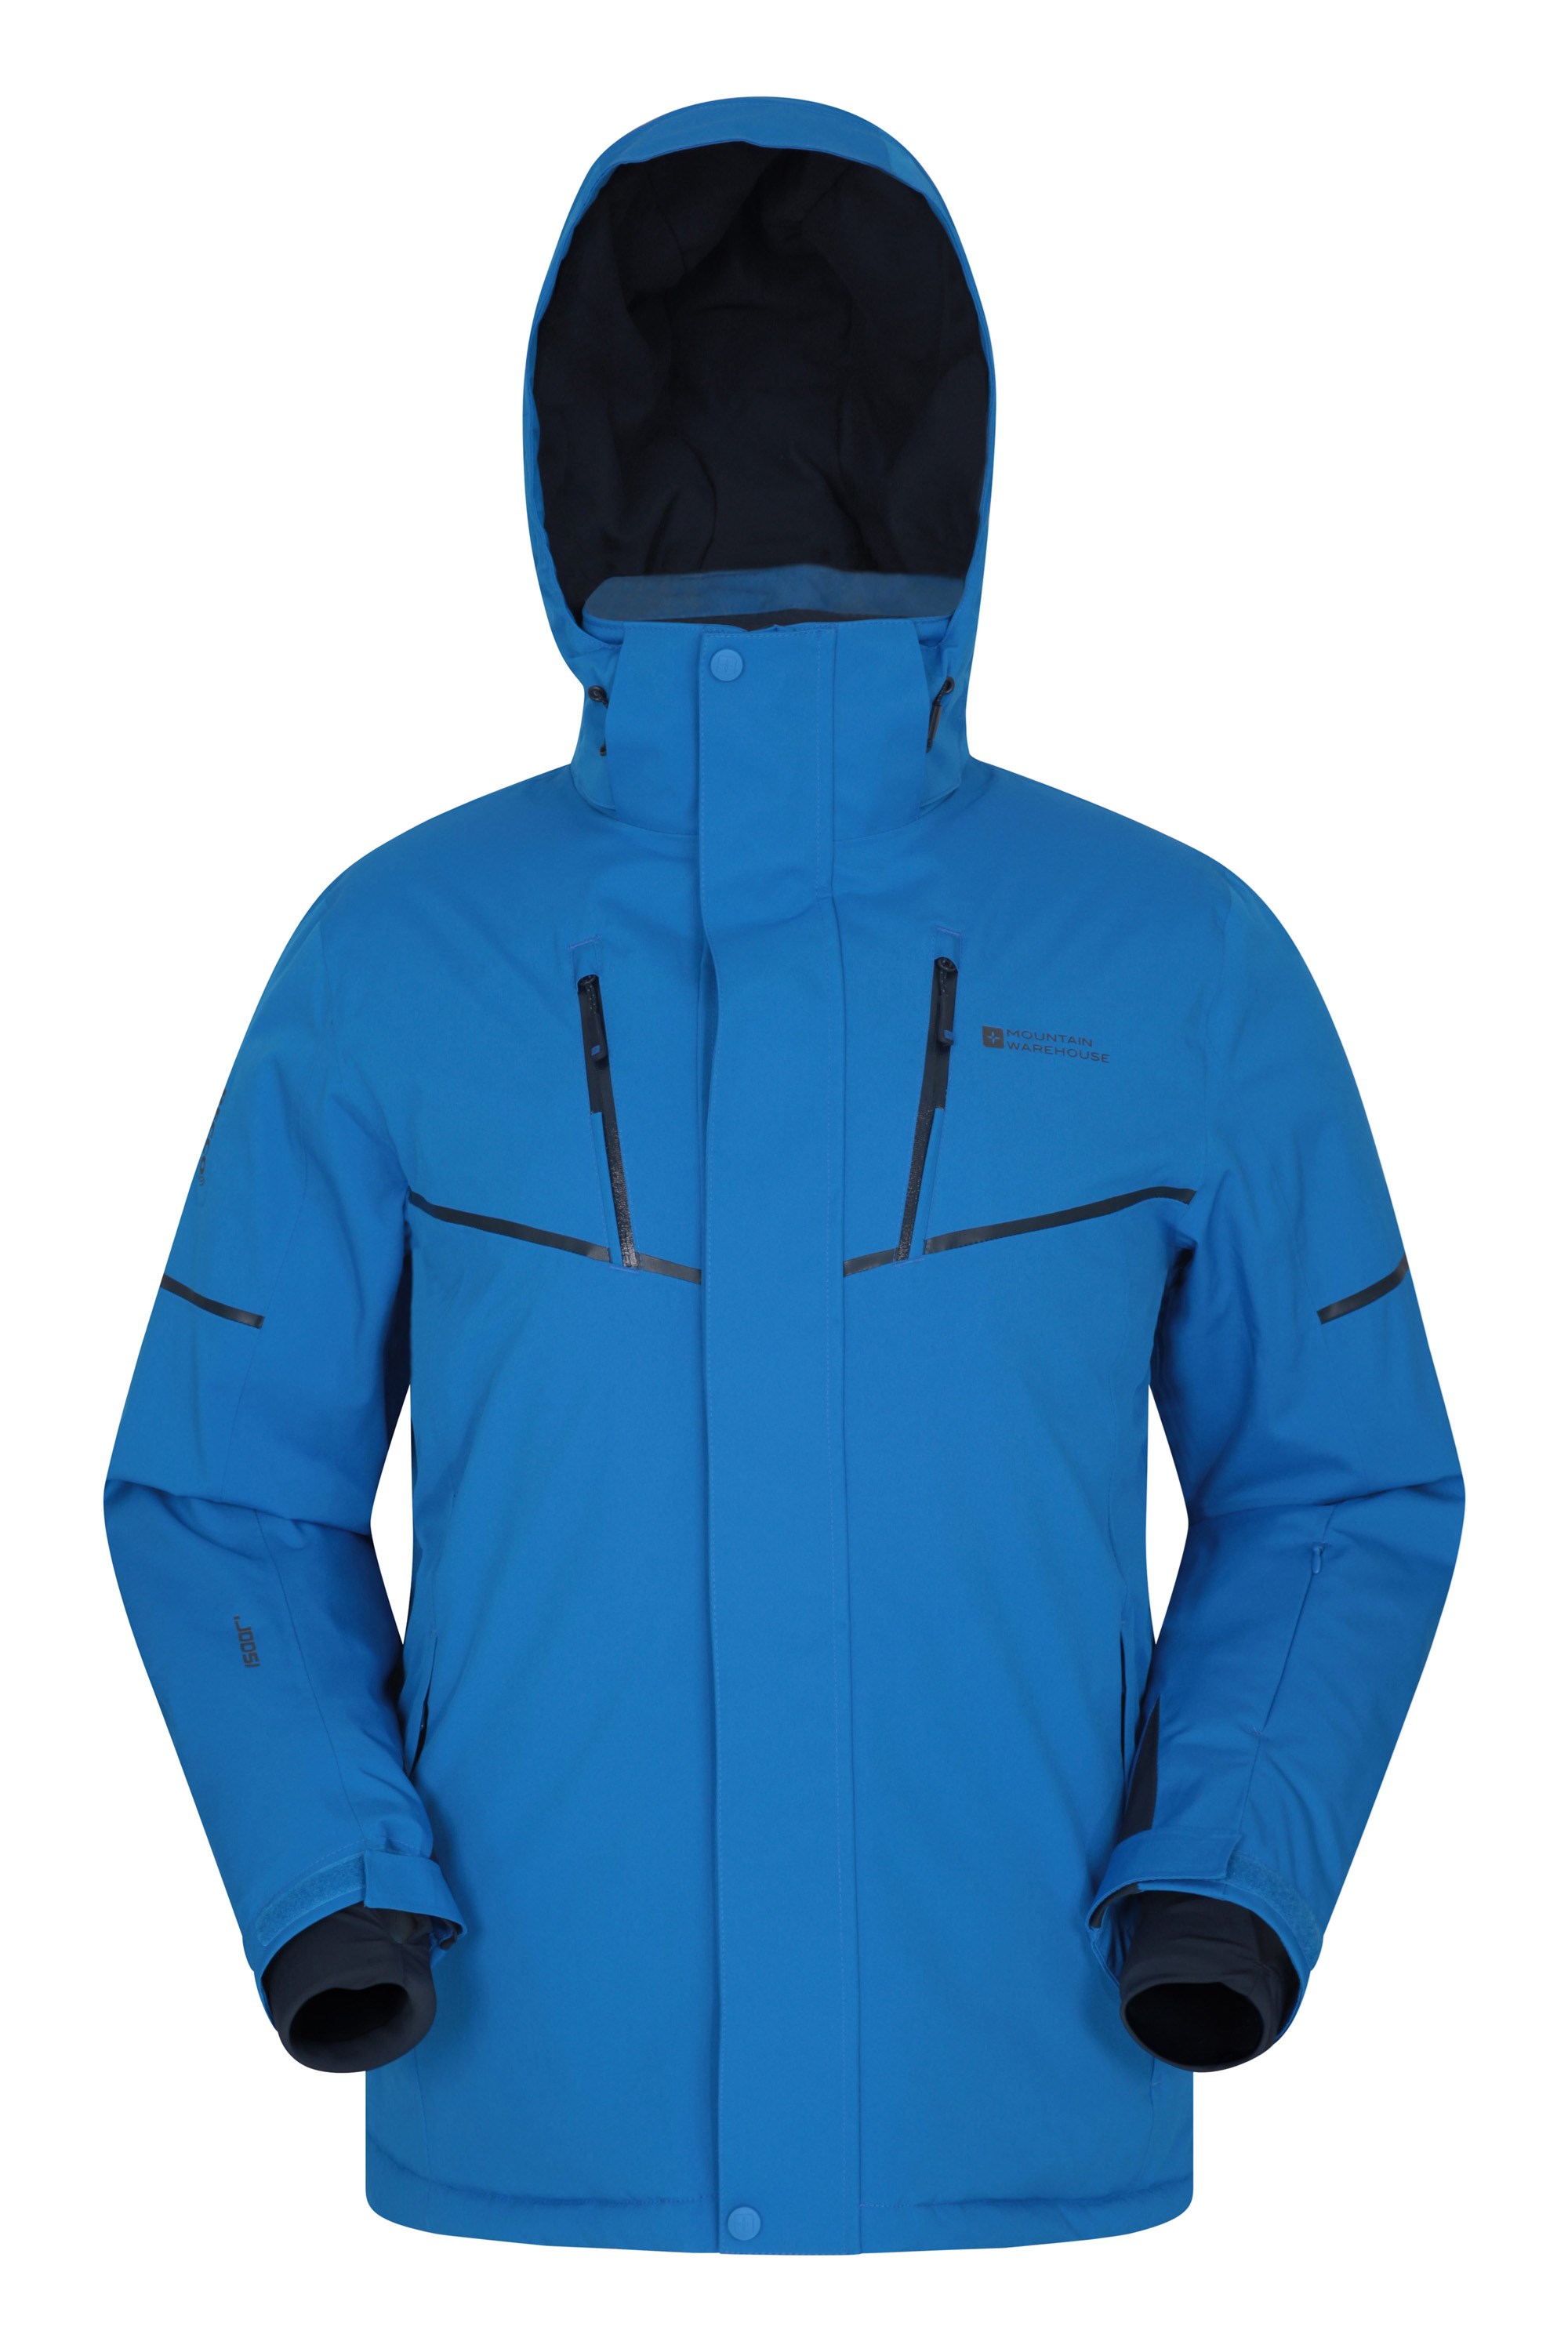 Mountain Warehouse Galactic Extreme Mens Ski Jacket Blue